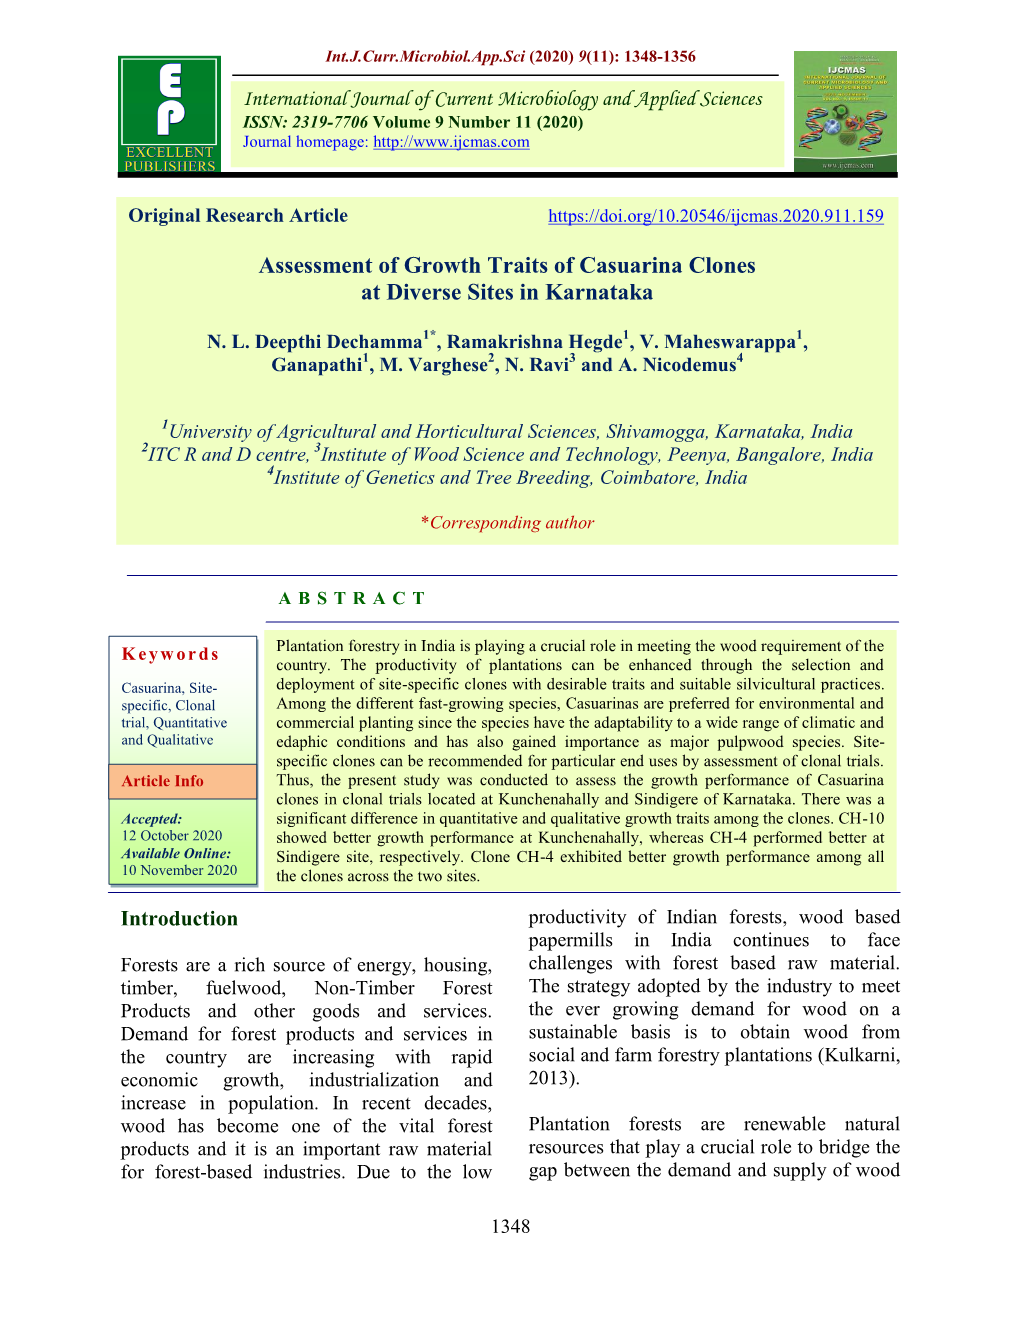 Assessment of Growth Traits of Casuarina Clones at Diverse Sites in Karnataka